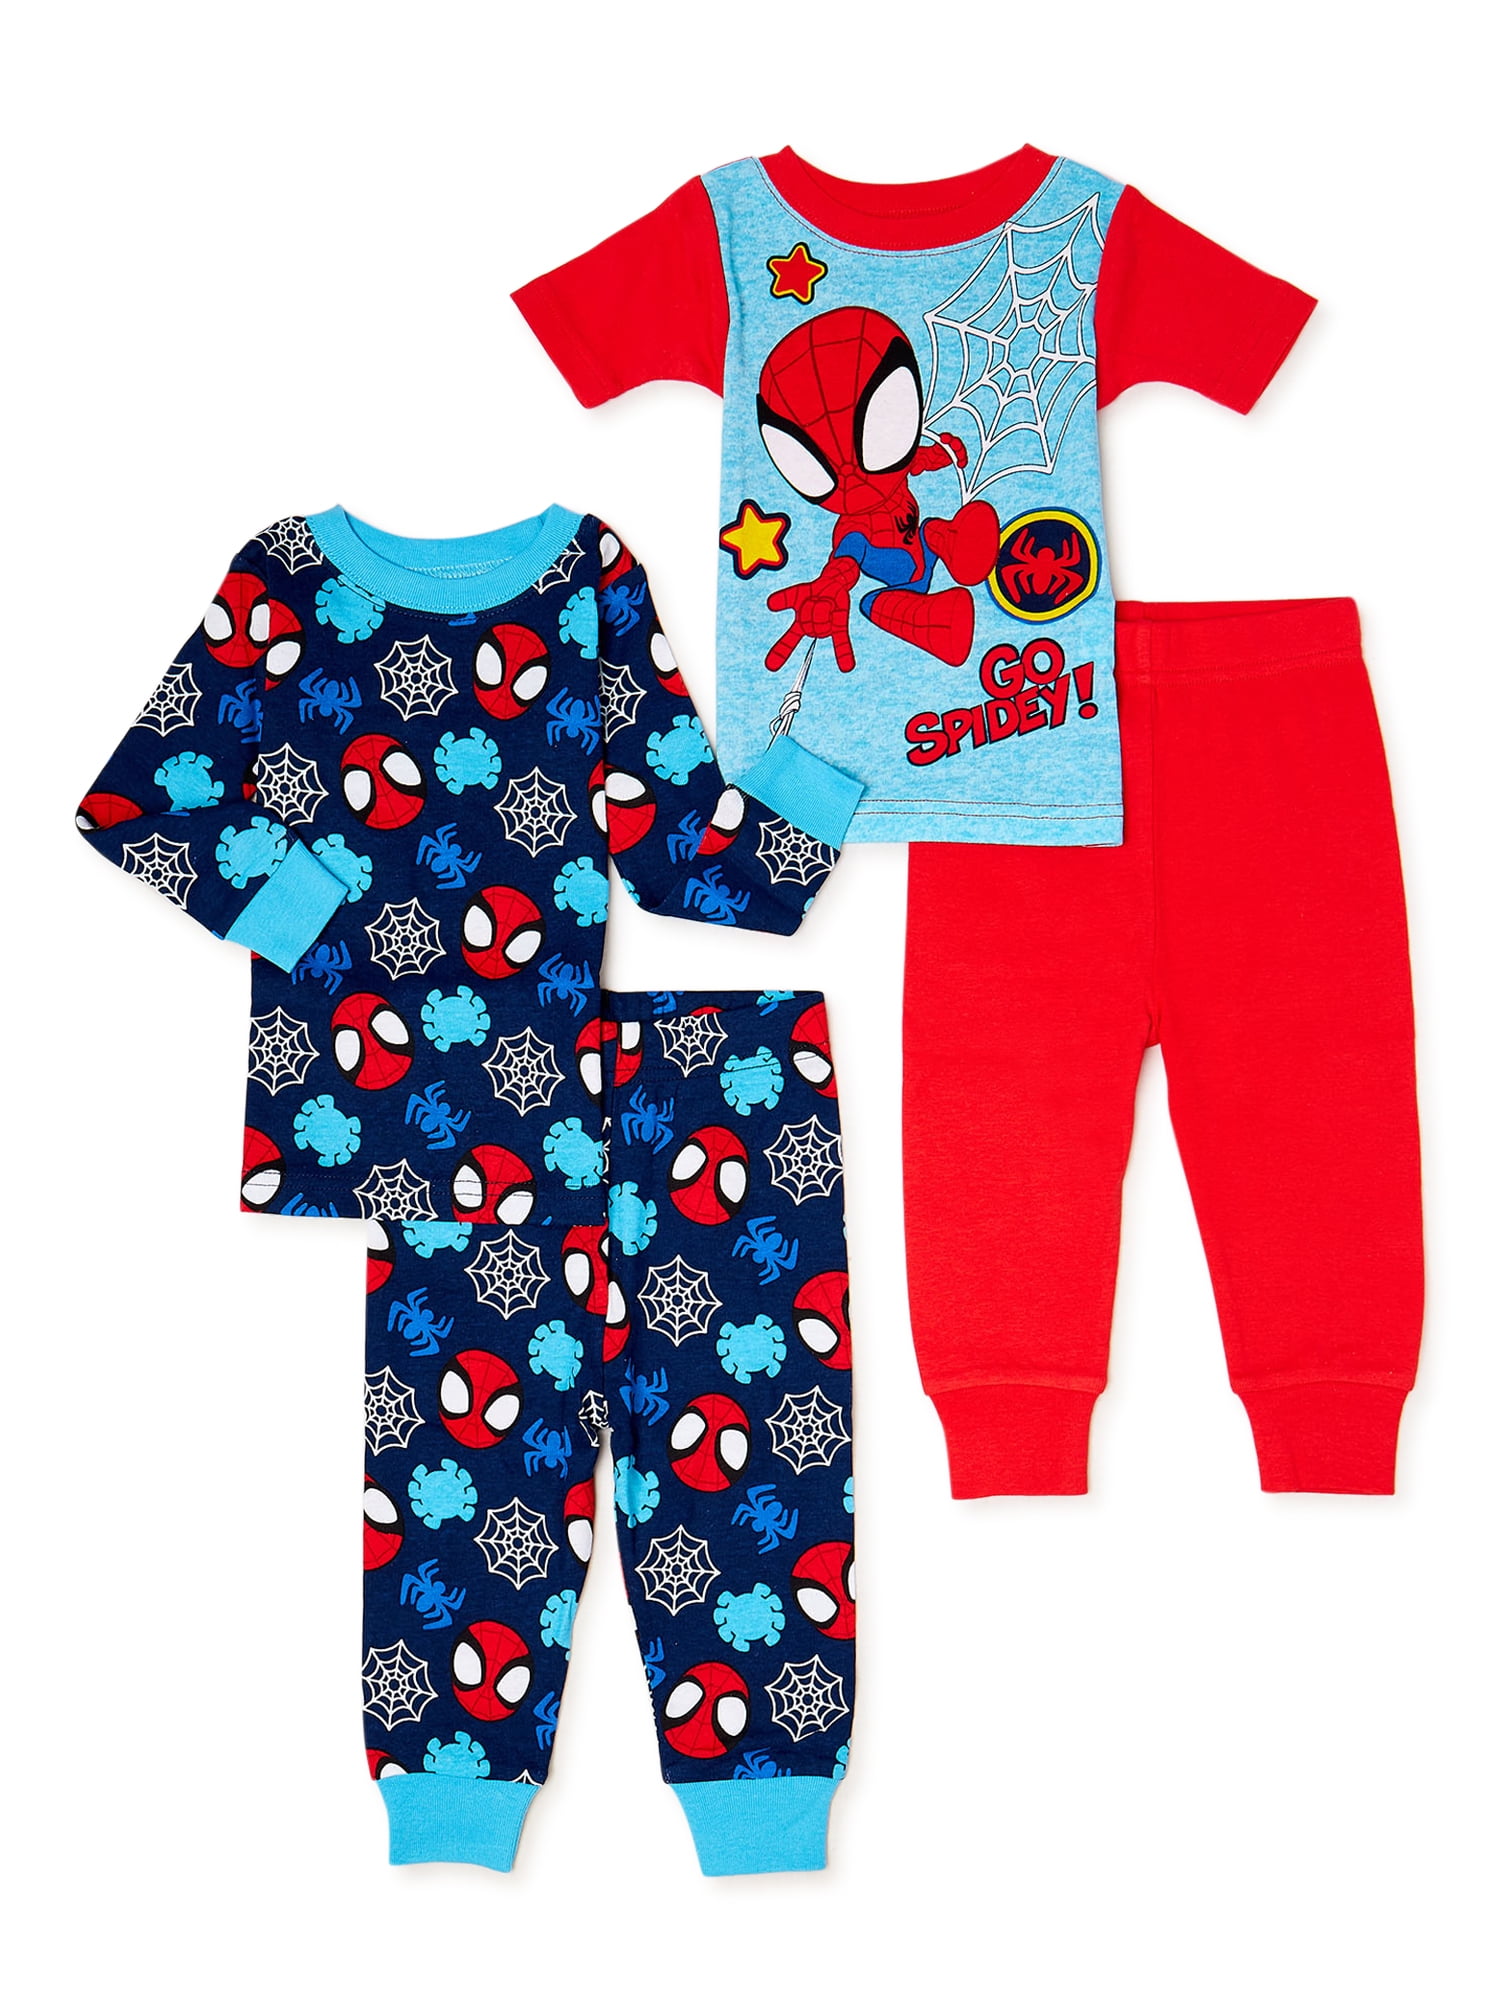 New Spiderman toddler boys pajamas size 2T 3T 4T 5T Spiderman pajamas 